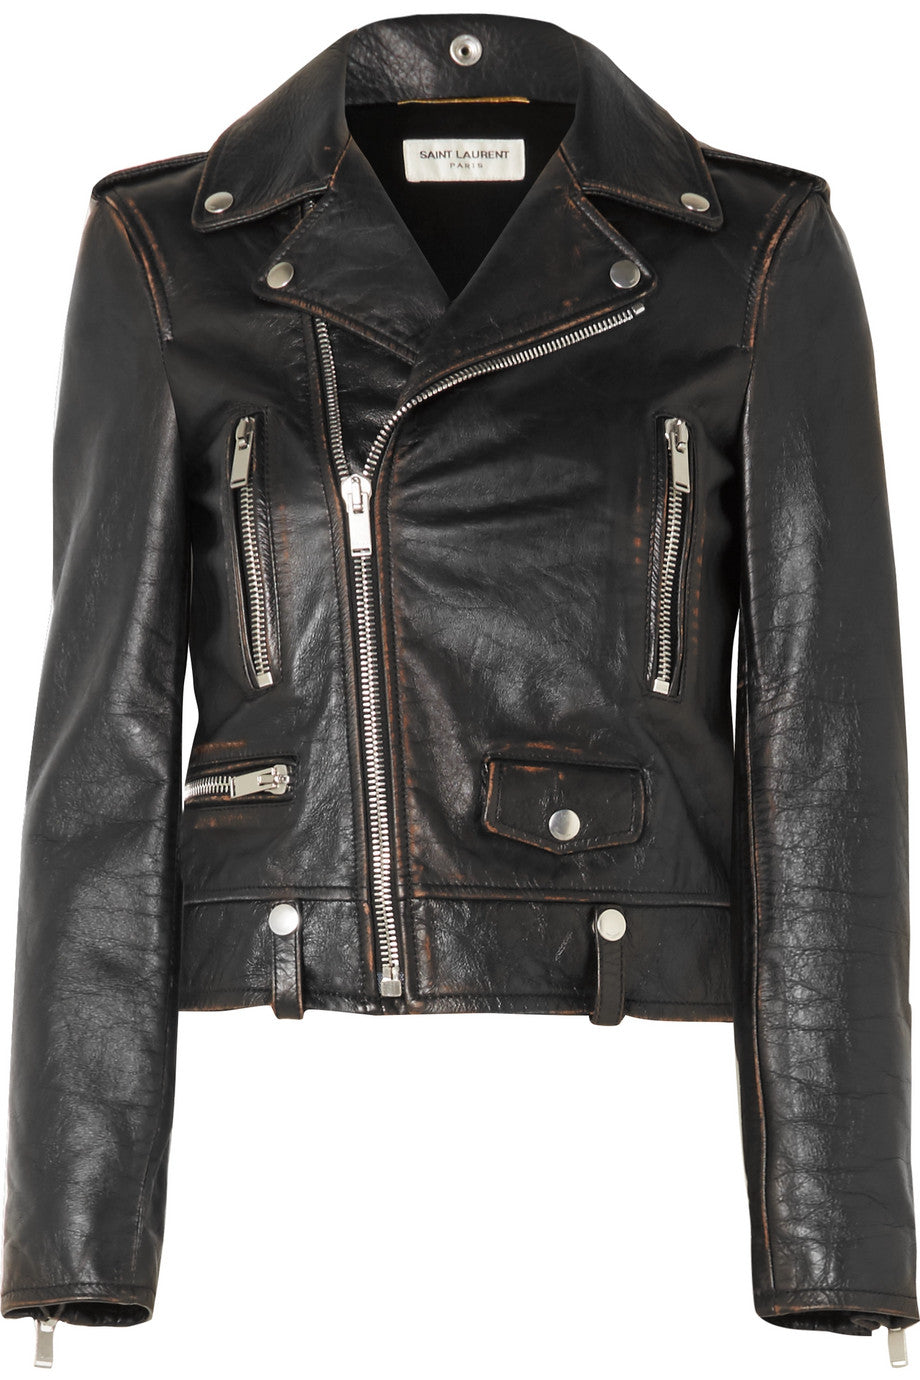 Saint Laurent - black distressed leather biker jacket